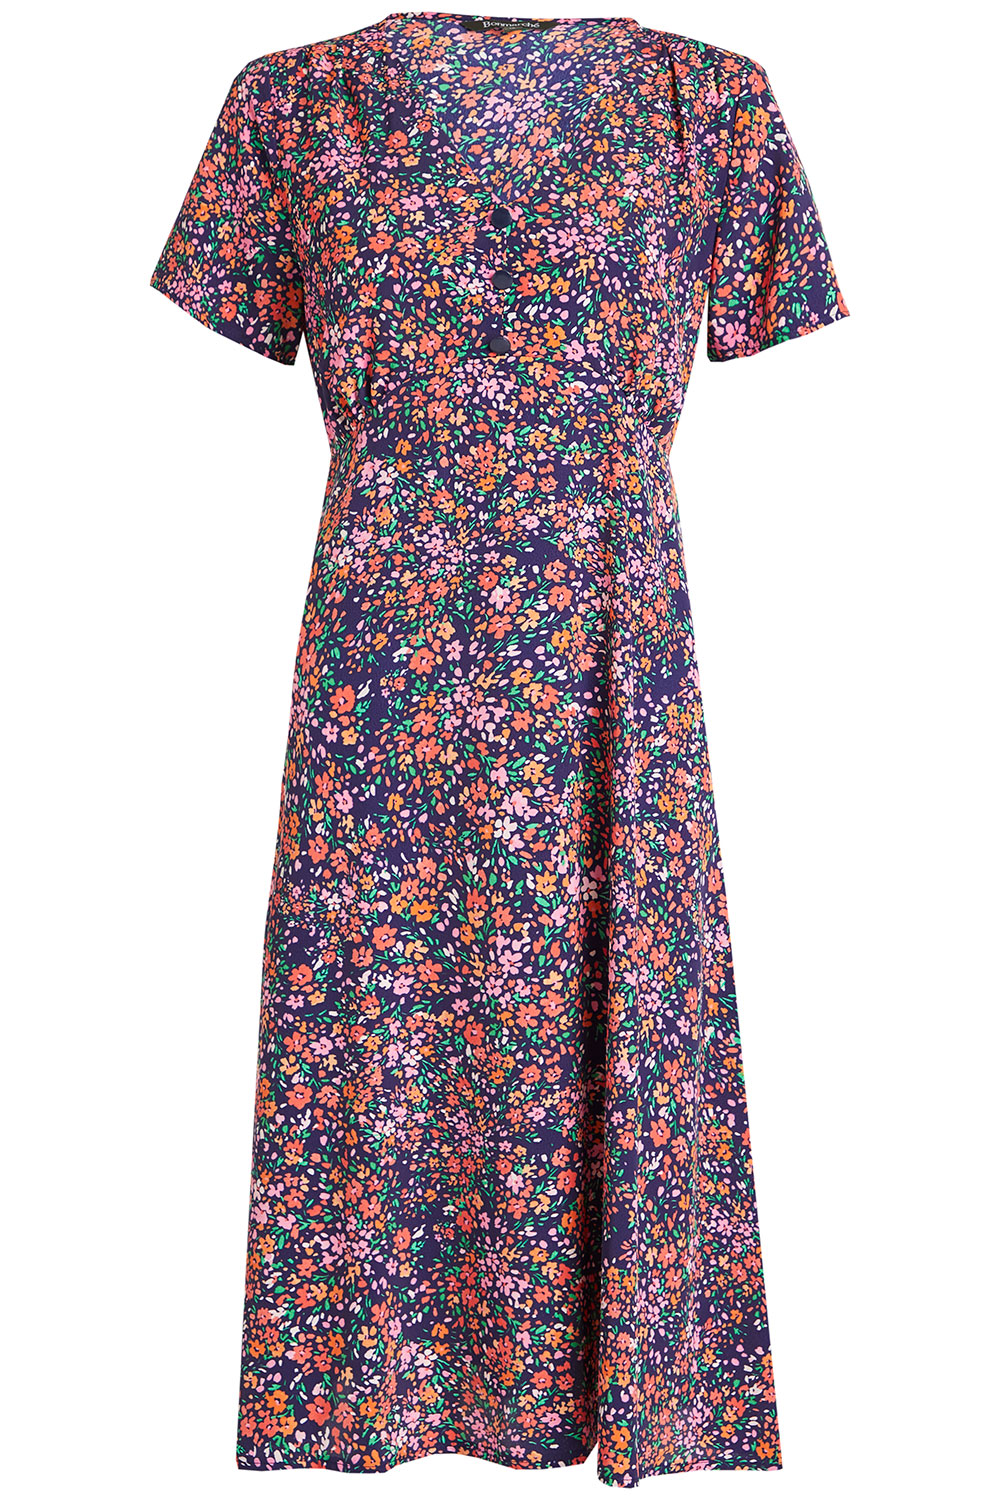 Navy Short Sleeve Ditsy Floral Tea Dress | Bonmarché